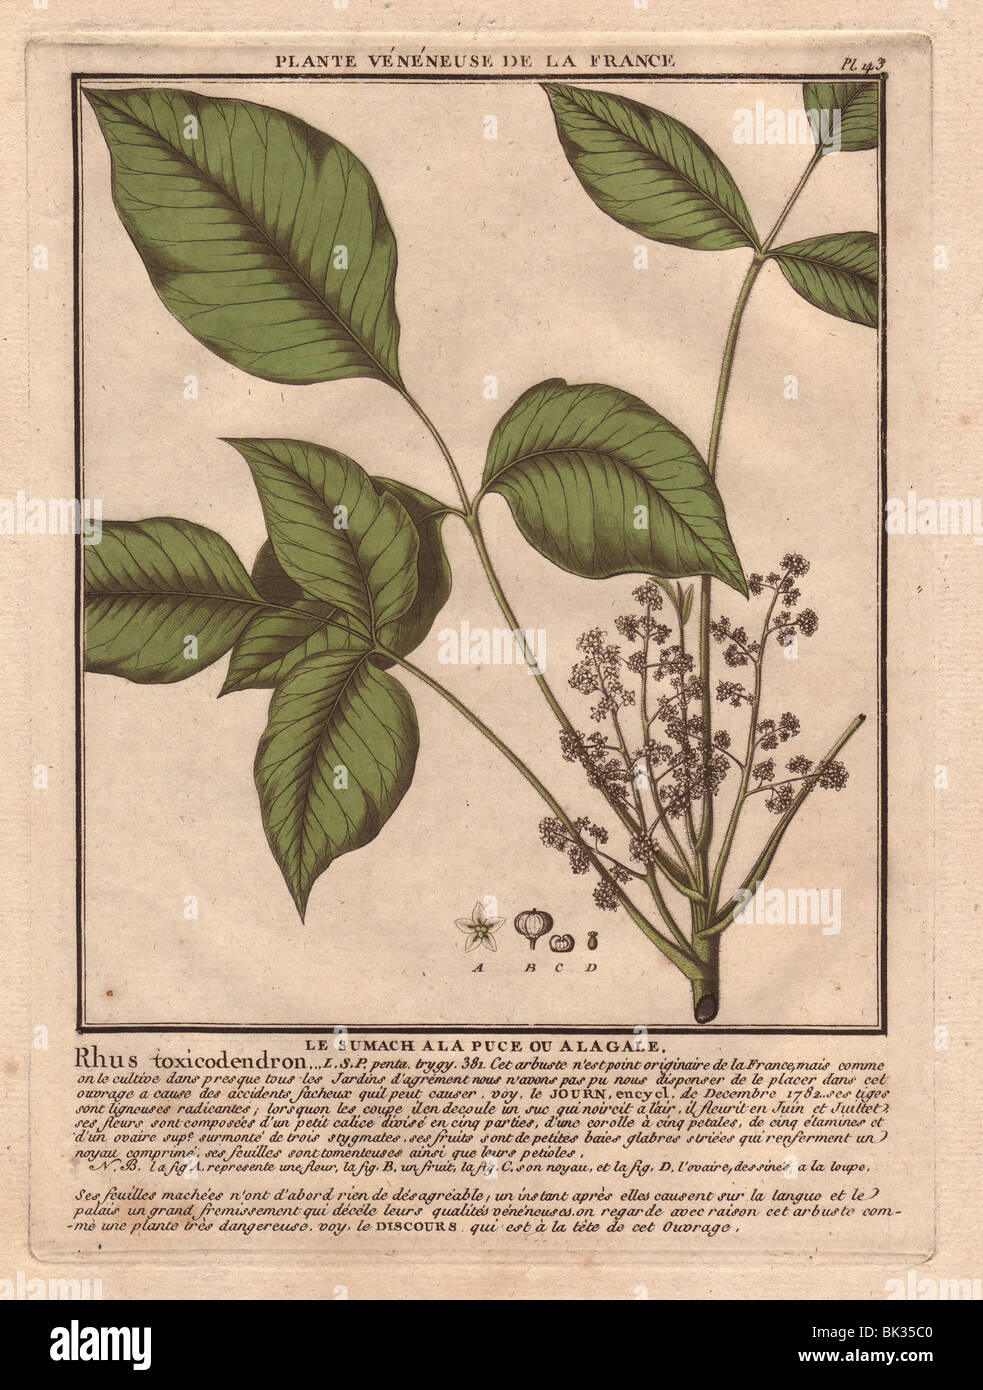 Poison ivy (Toxicodendron radicans) sumac grimpant  Le sumach a la puce ou a la gale (Rhus toxicodendron) Stock Photo